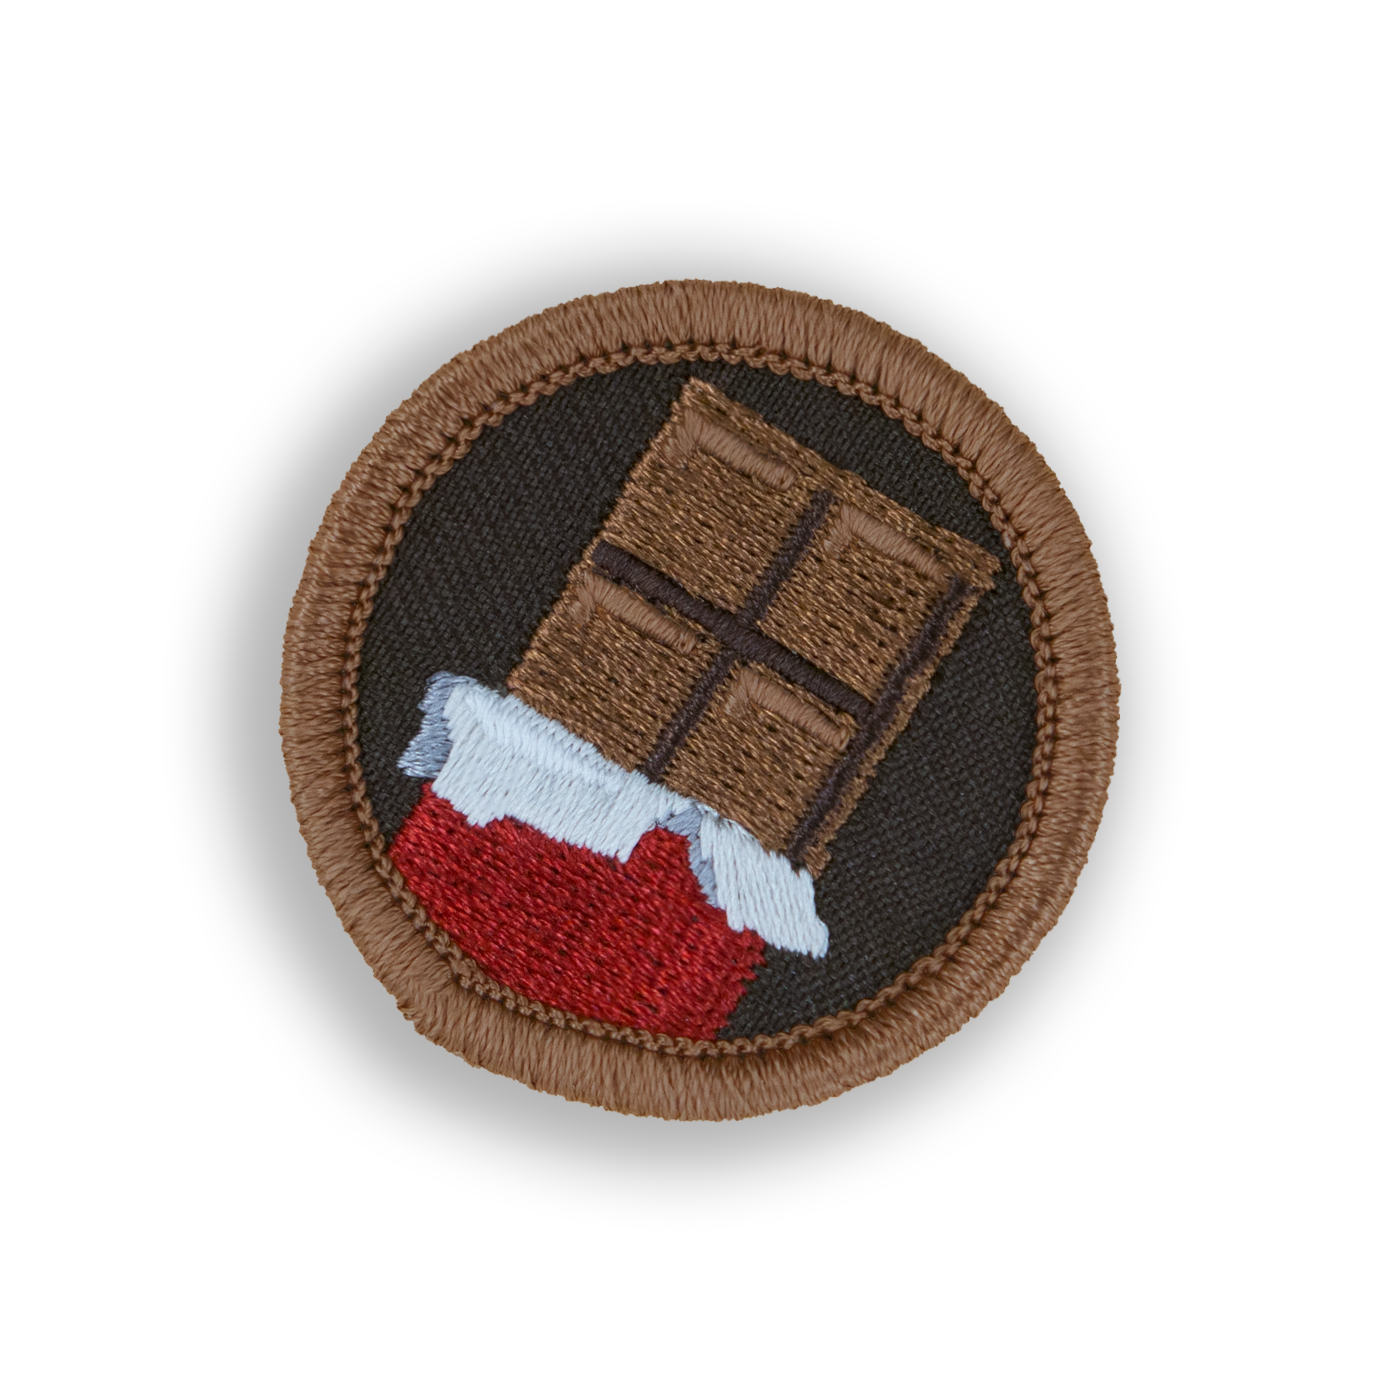 Chocoholic Patch | Demerit Wear - Fake Merit Badges